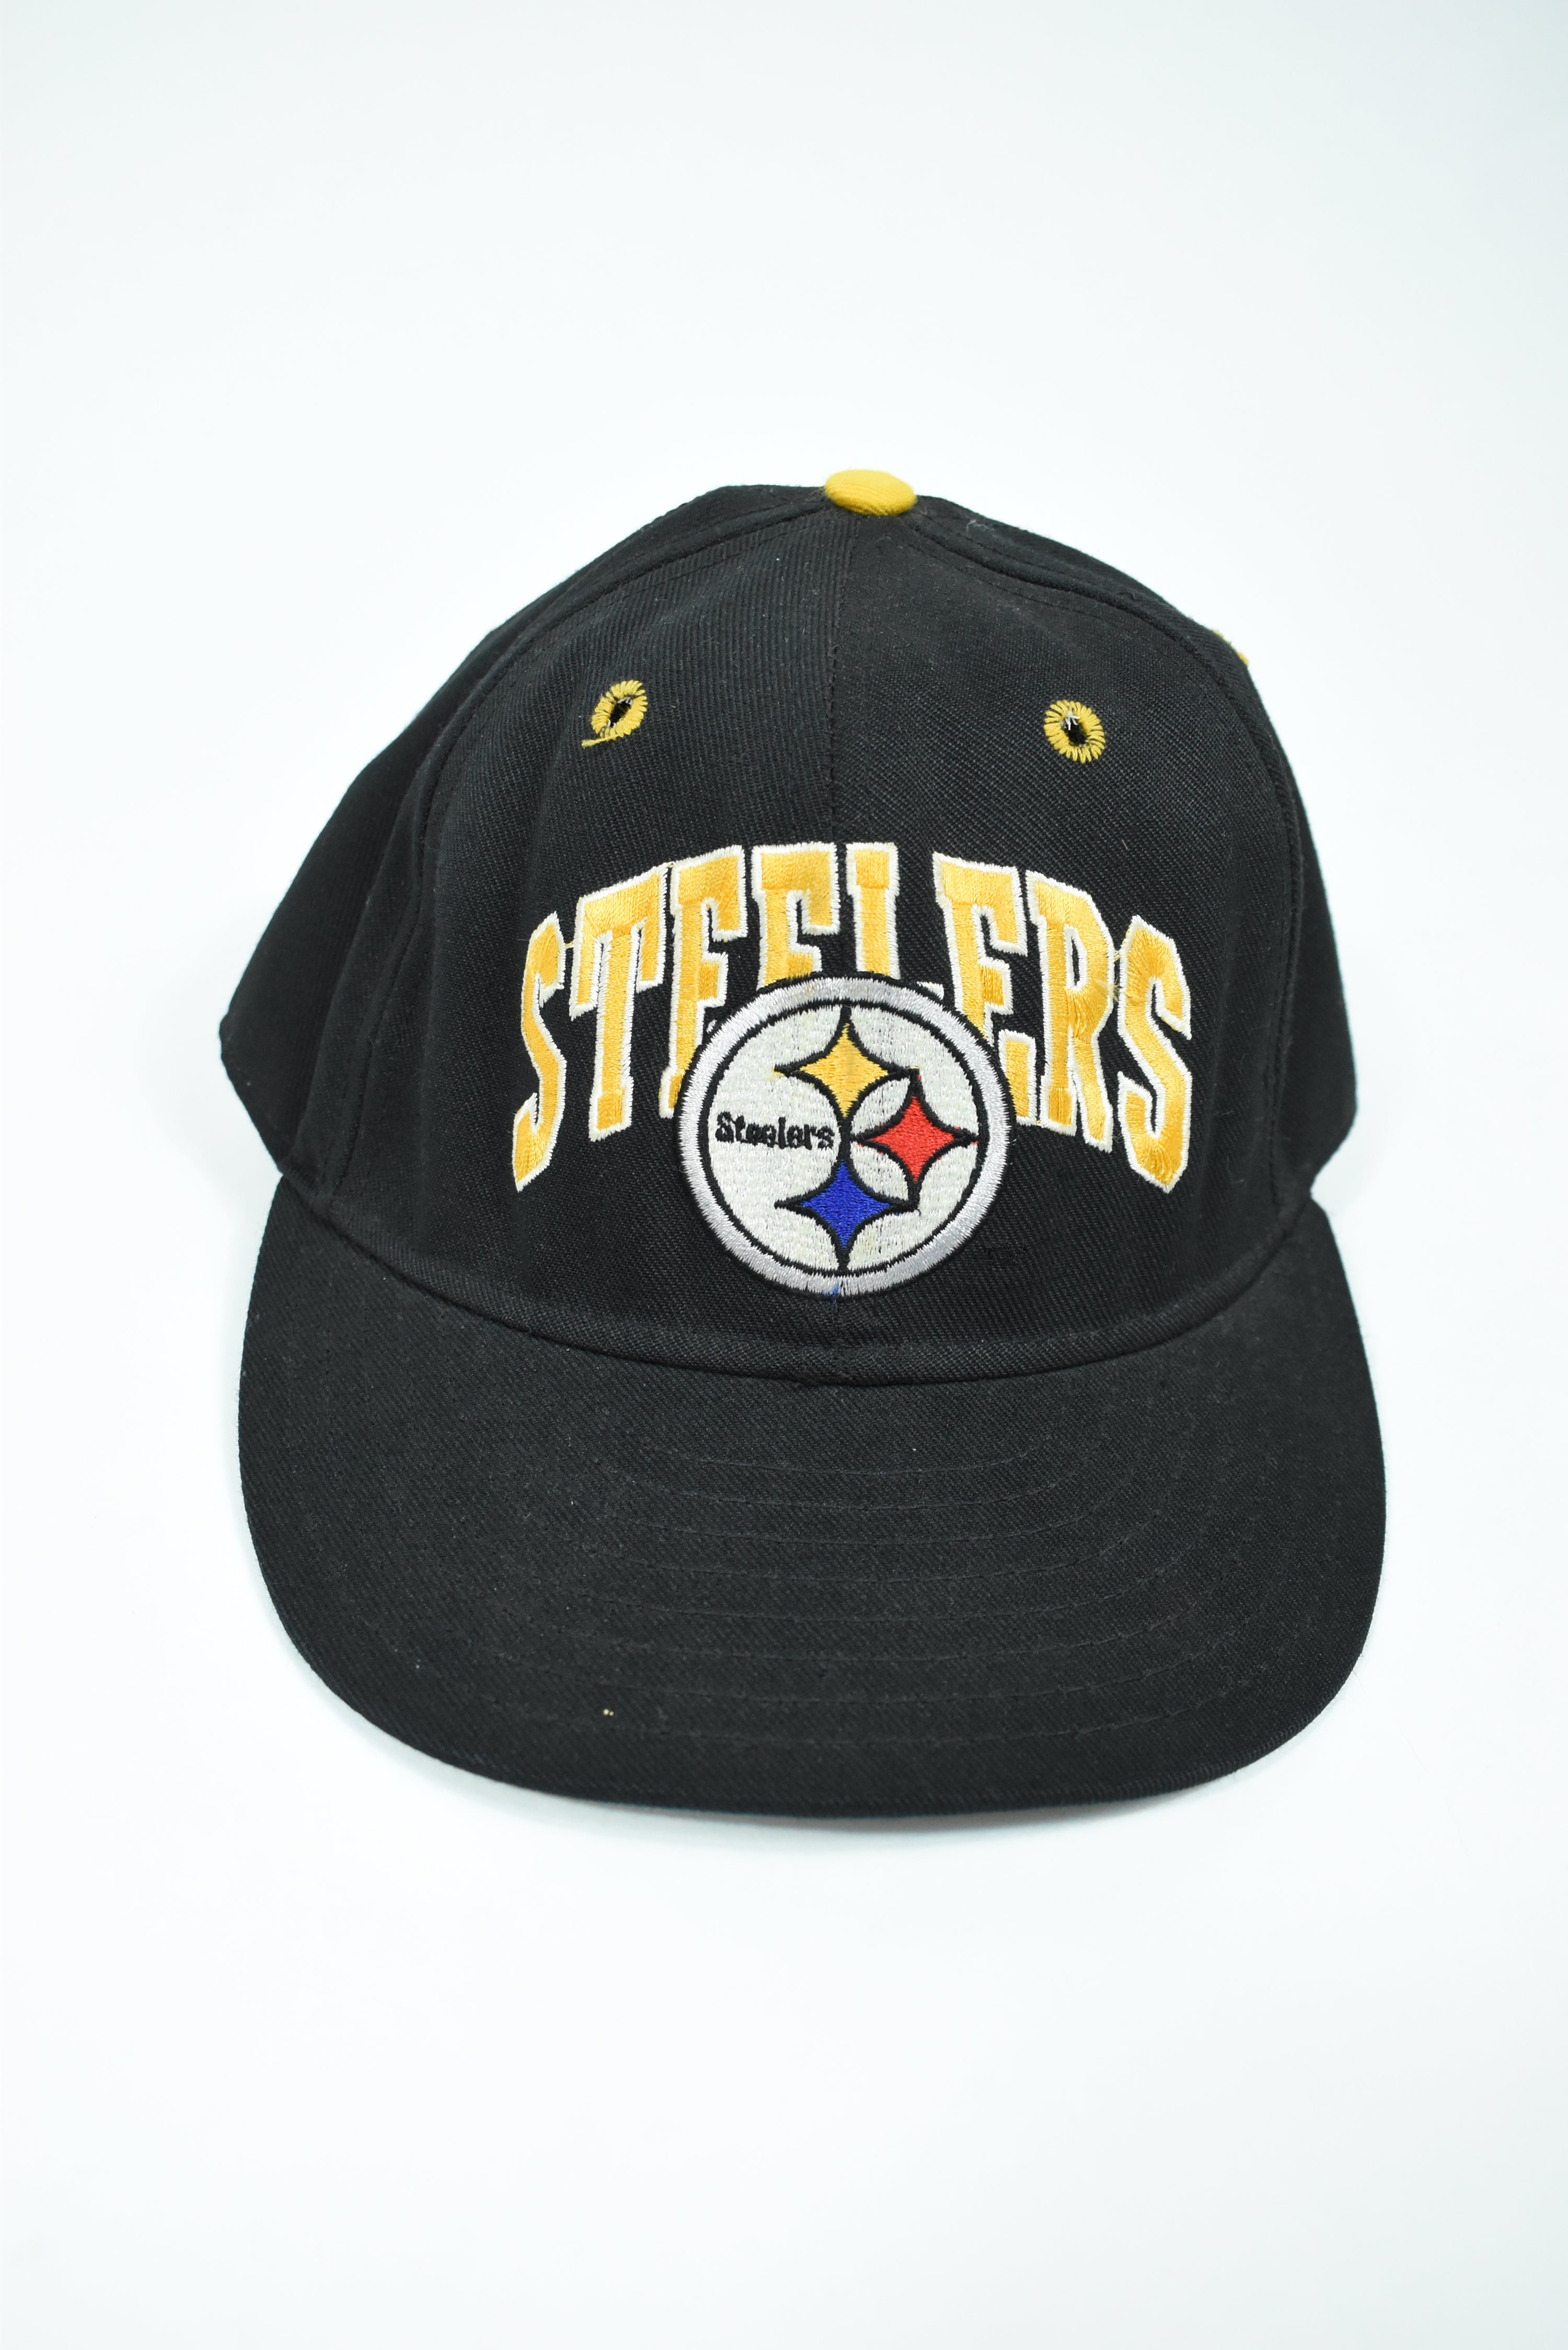 Vintage Steelers Embroidery Hat